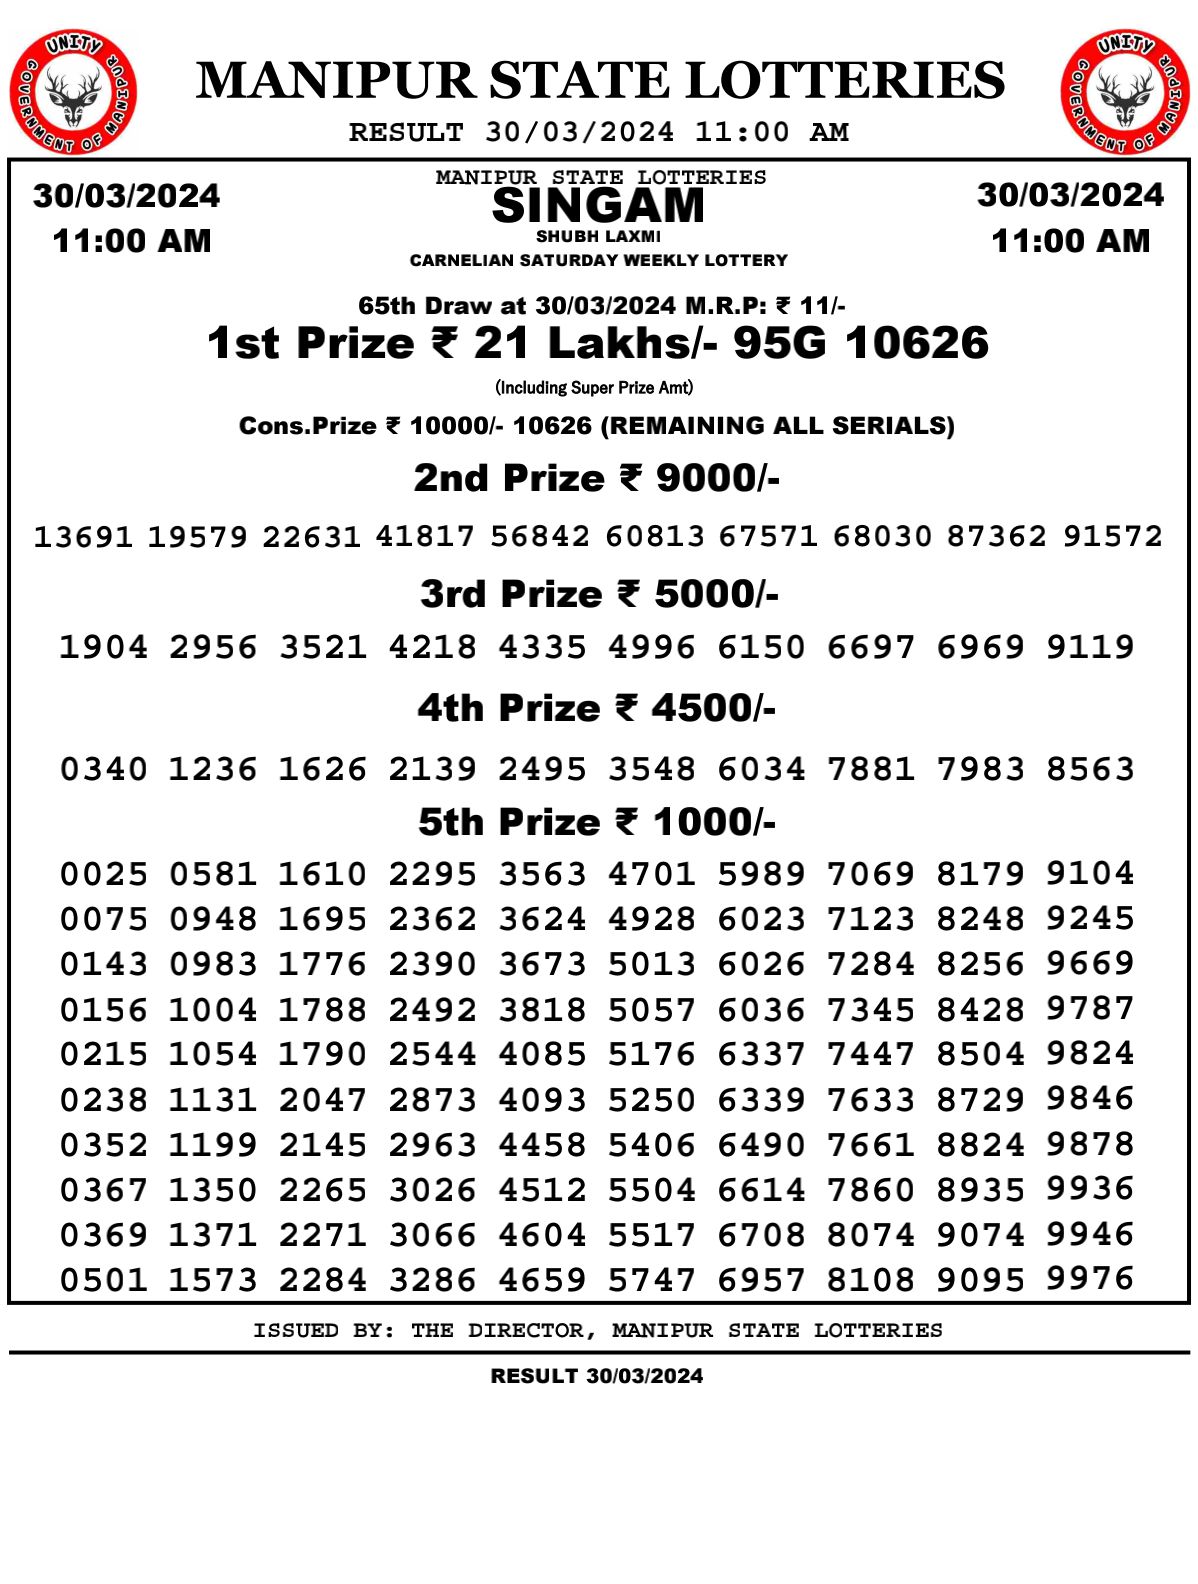 Kerala Lottery Results | Facebook